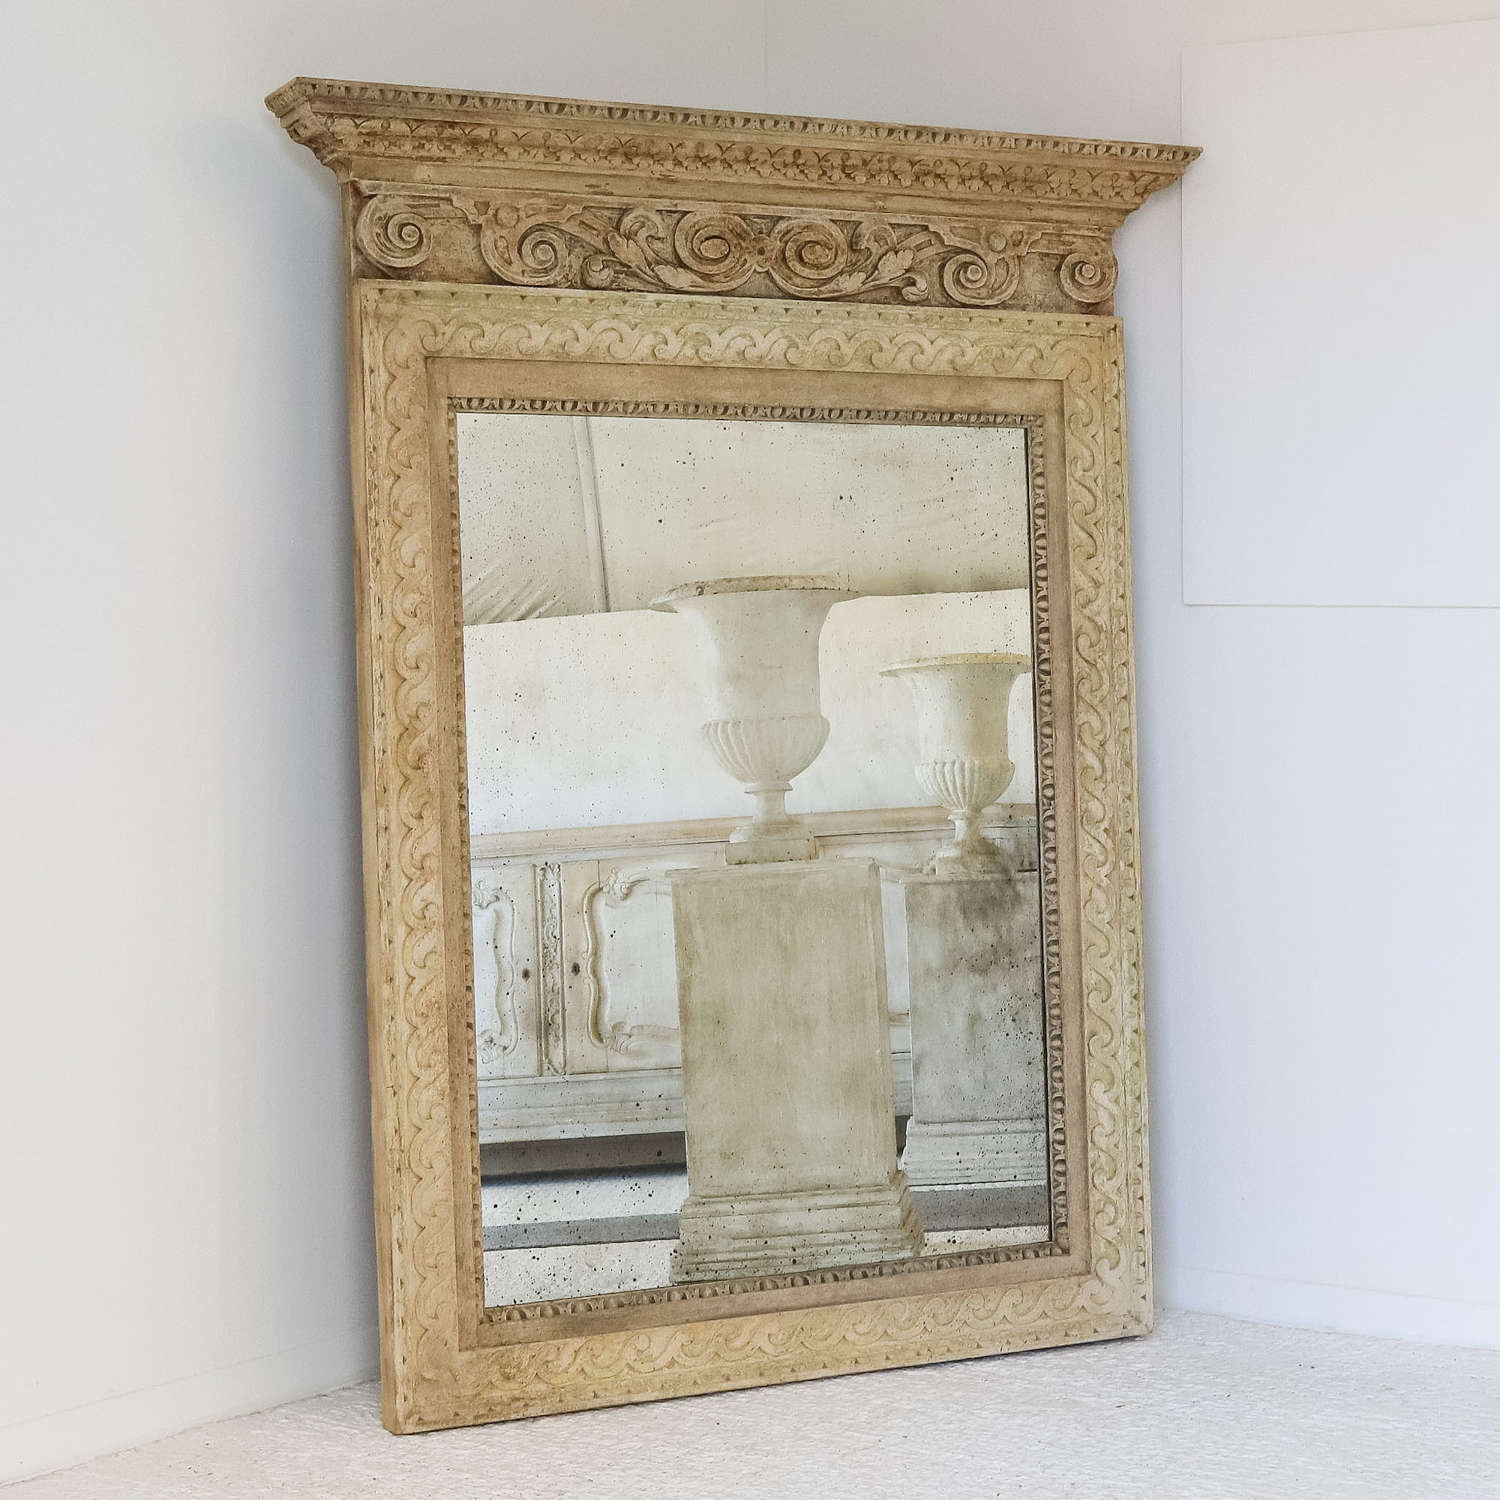 Unique Grand Scale Mirror with original paint finish 19thC mouldings